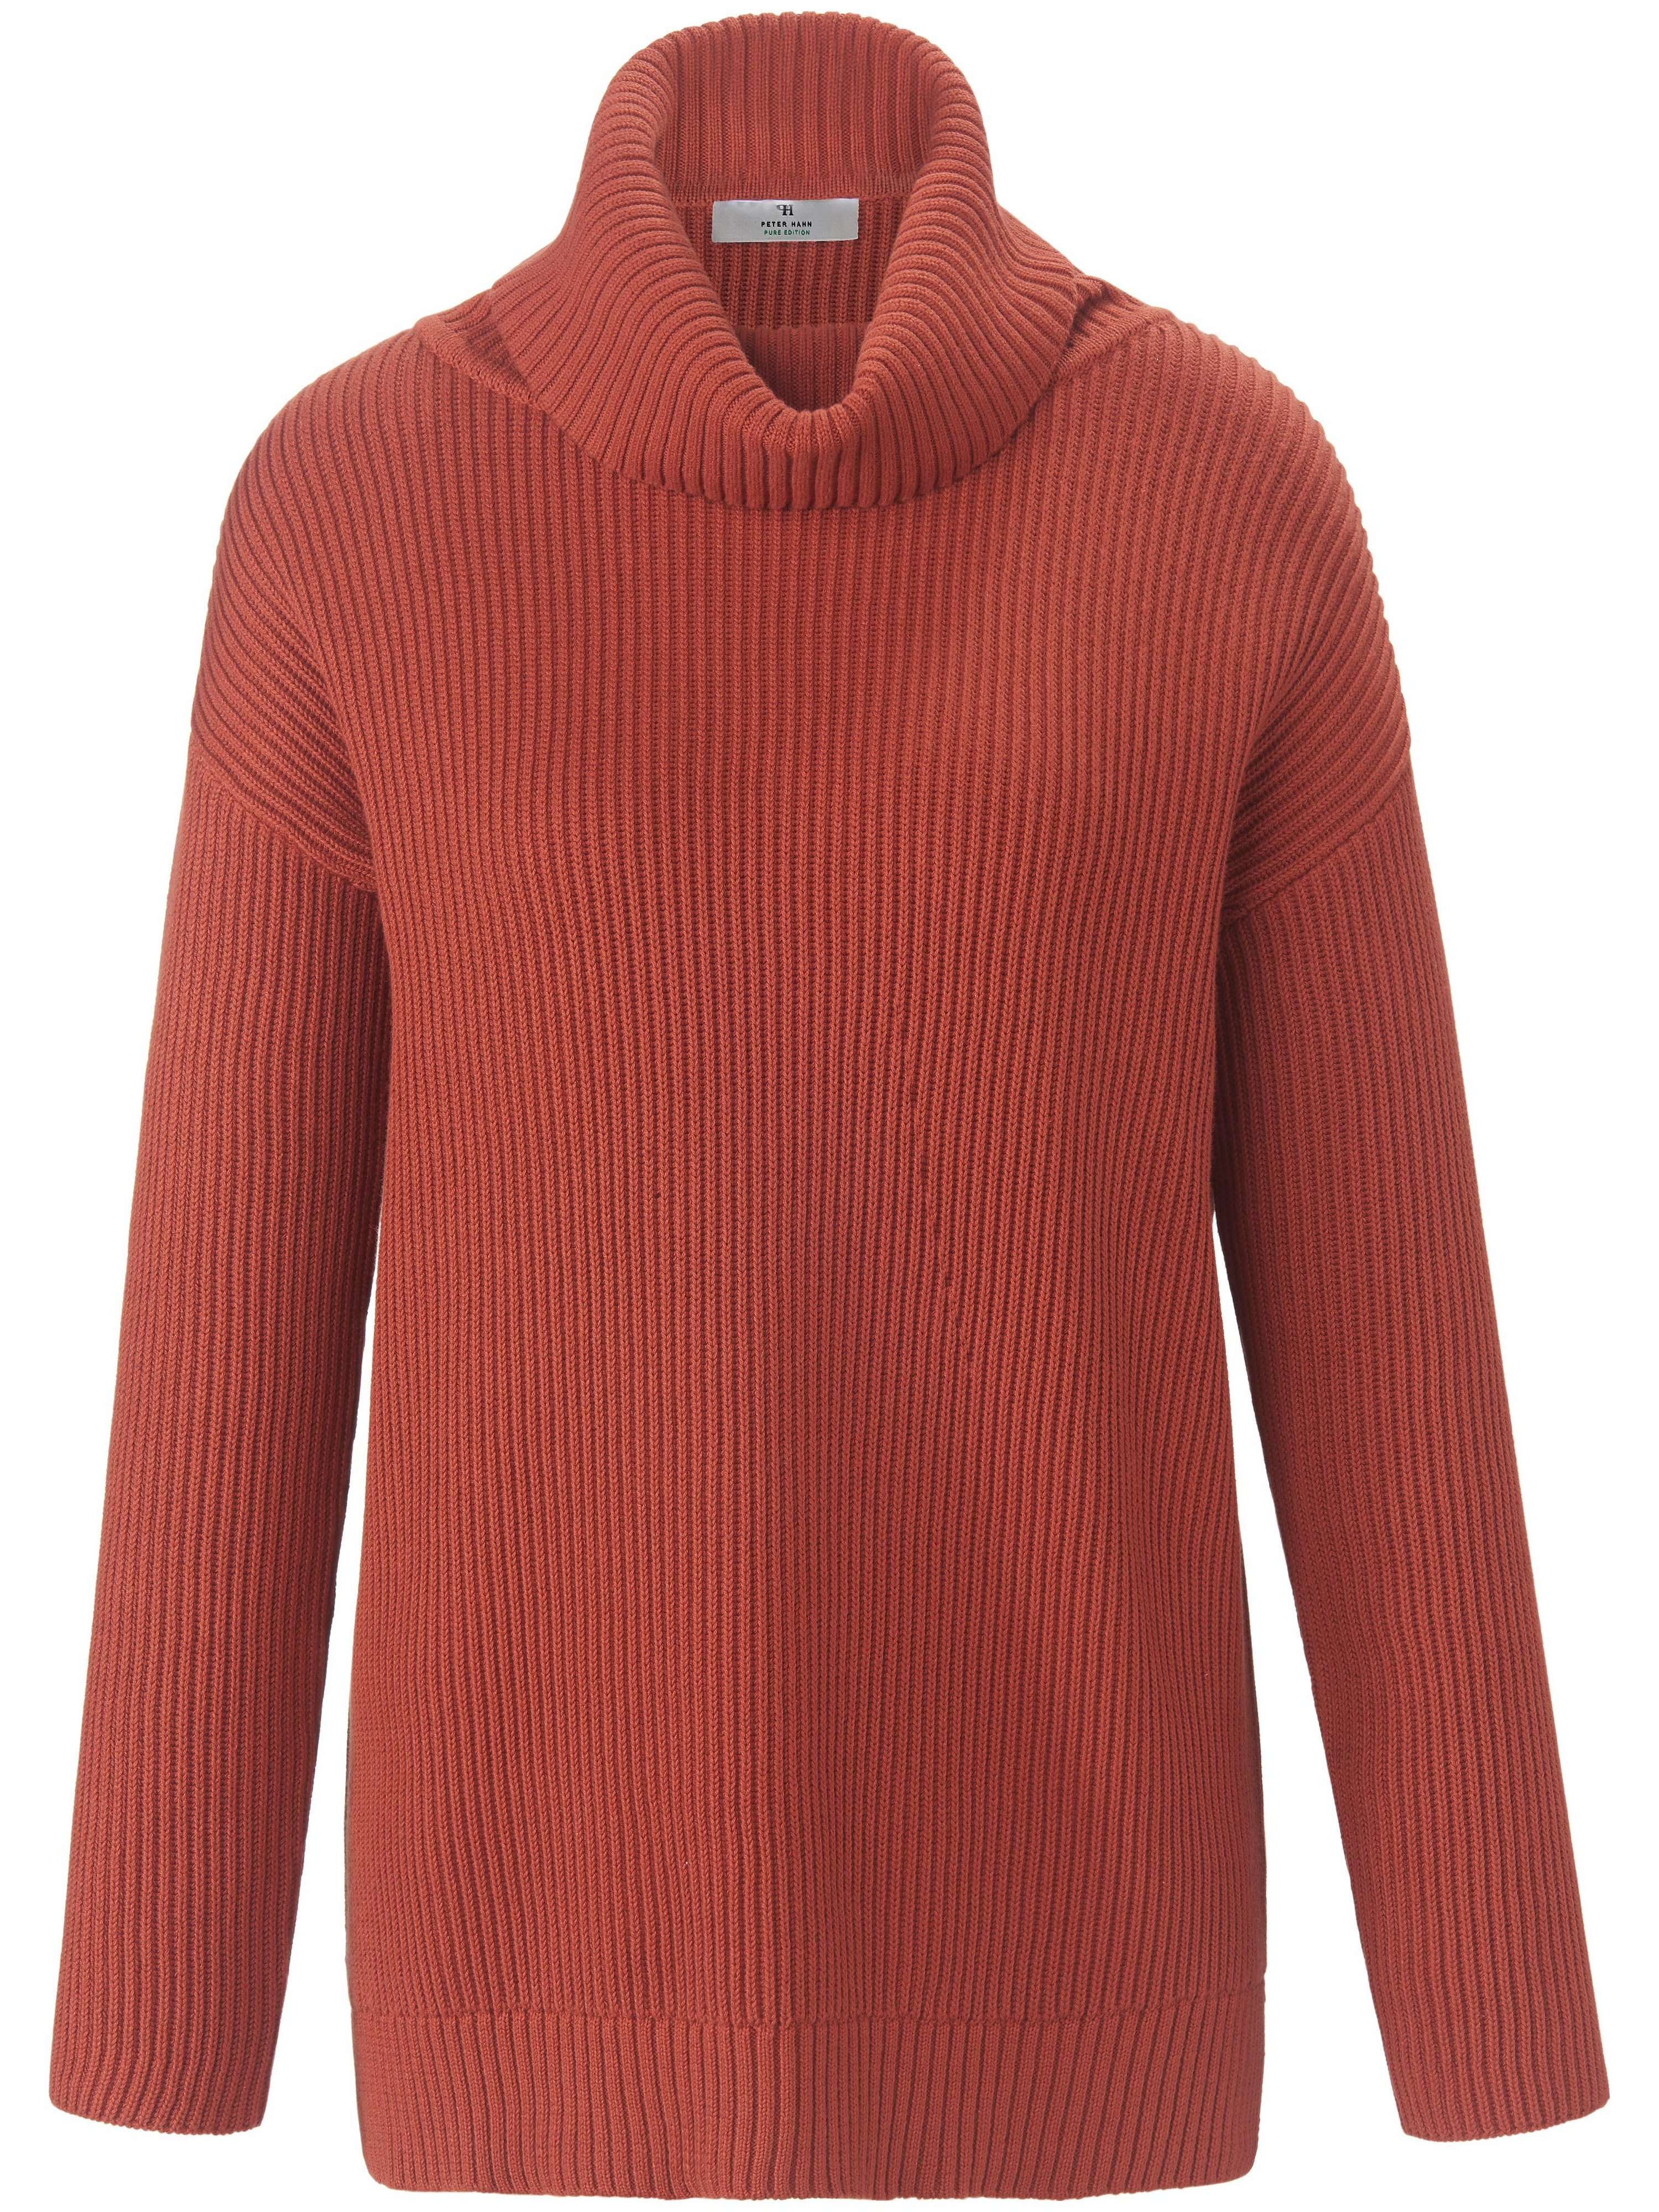 Roll-neck jumper in 100% cotton PETER HAHN PURE EDITION orange